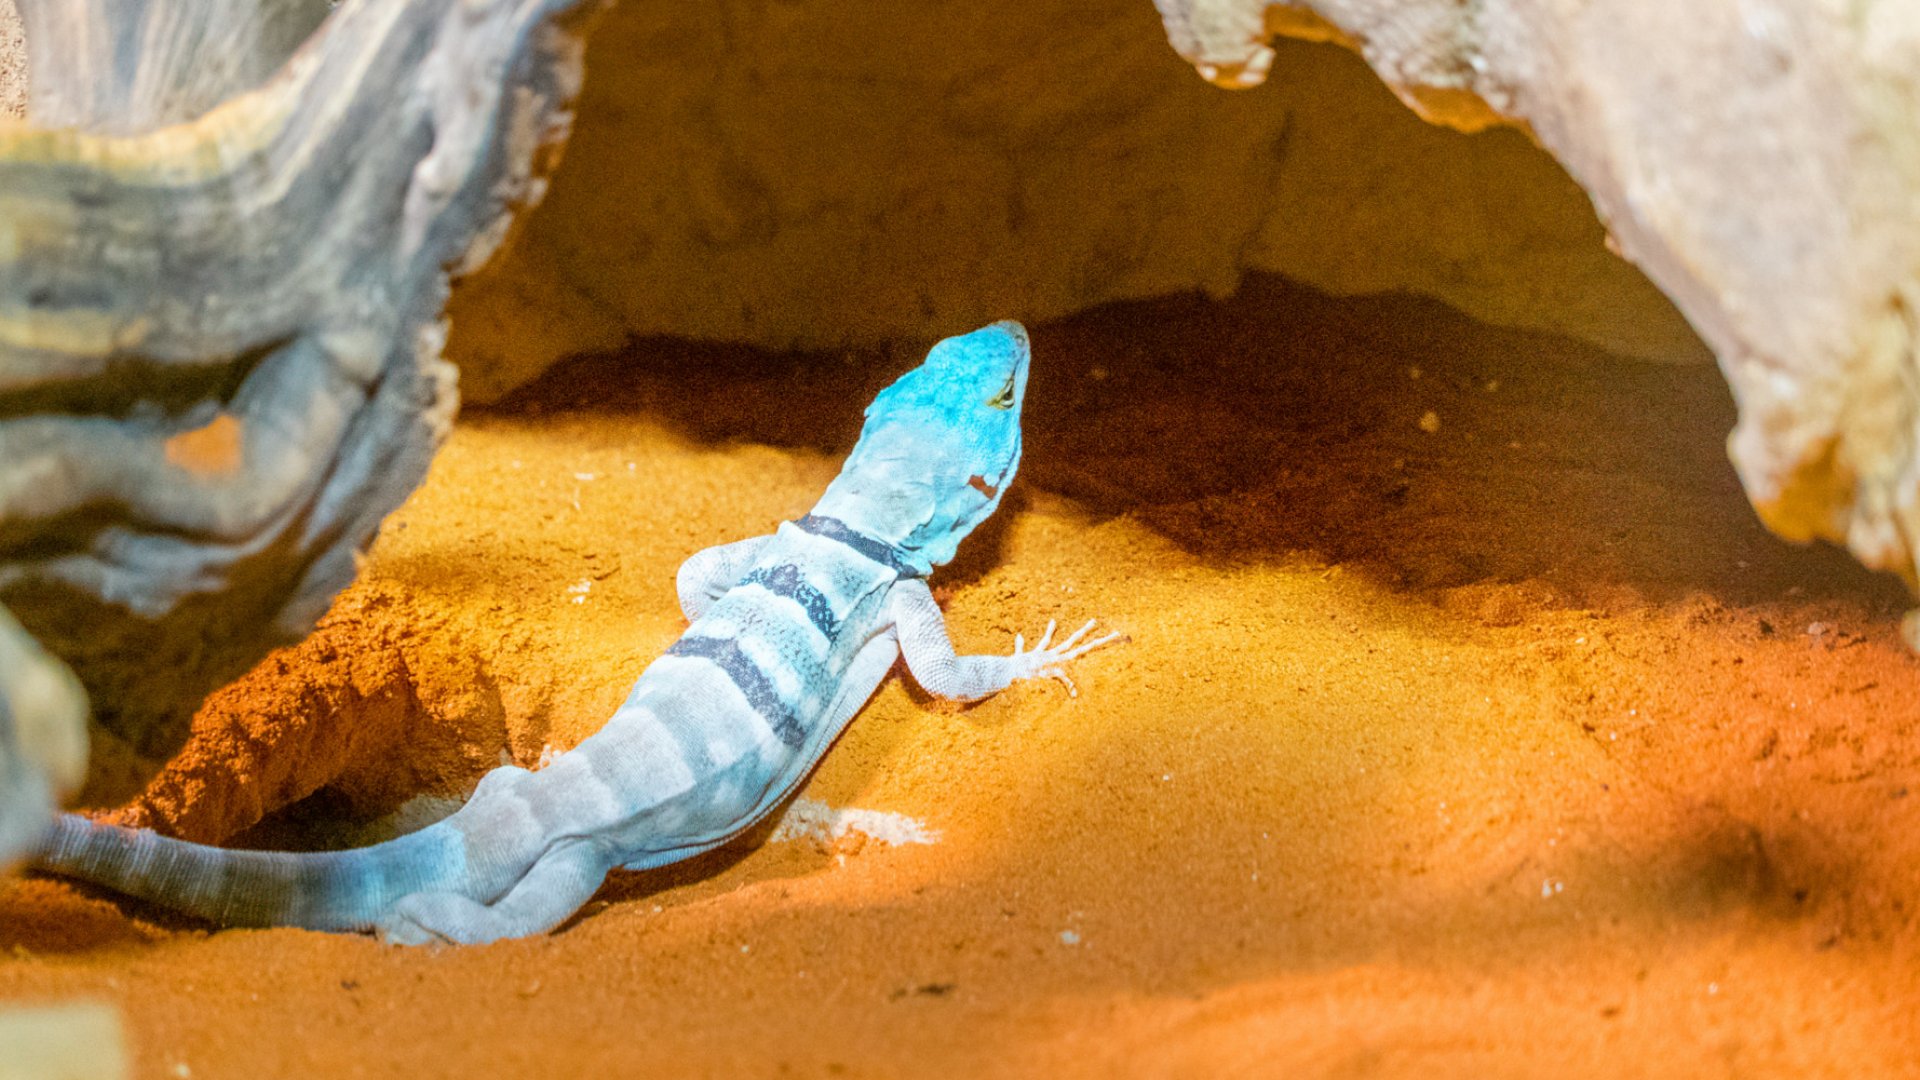 Baja blue rock lizard on orange sand